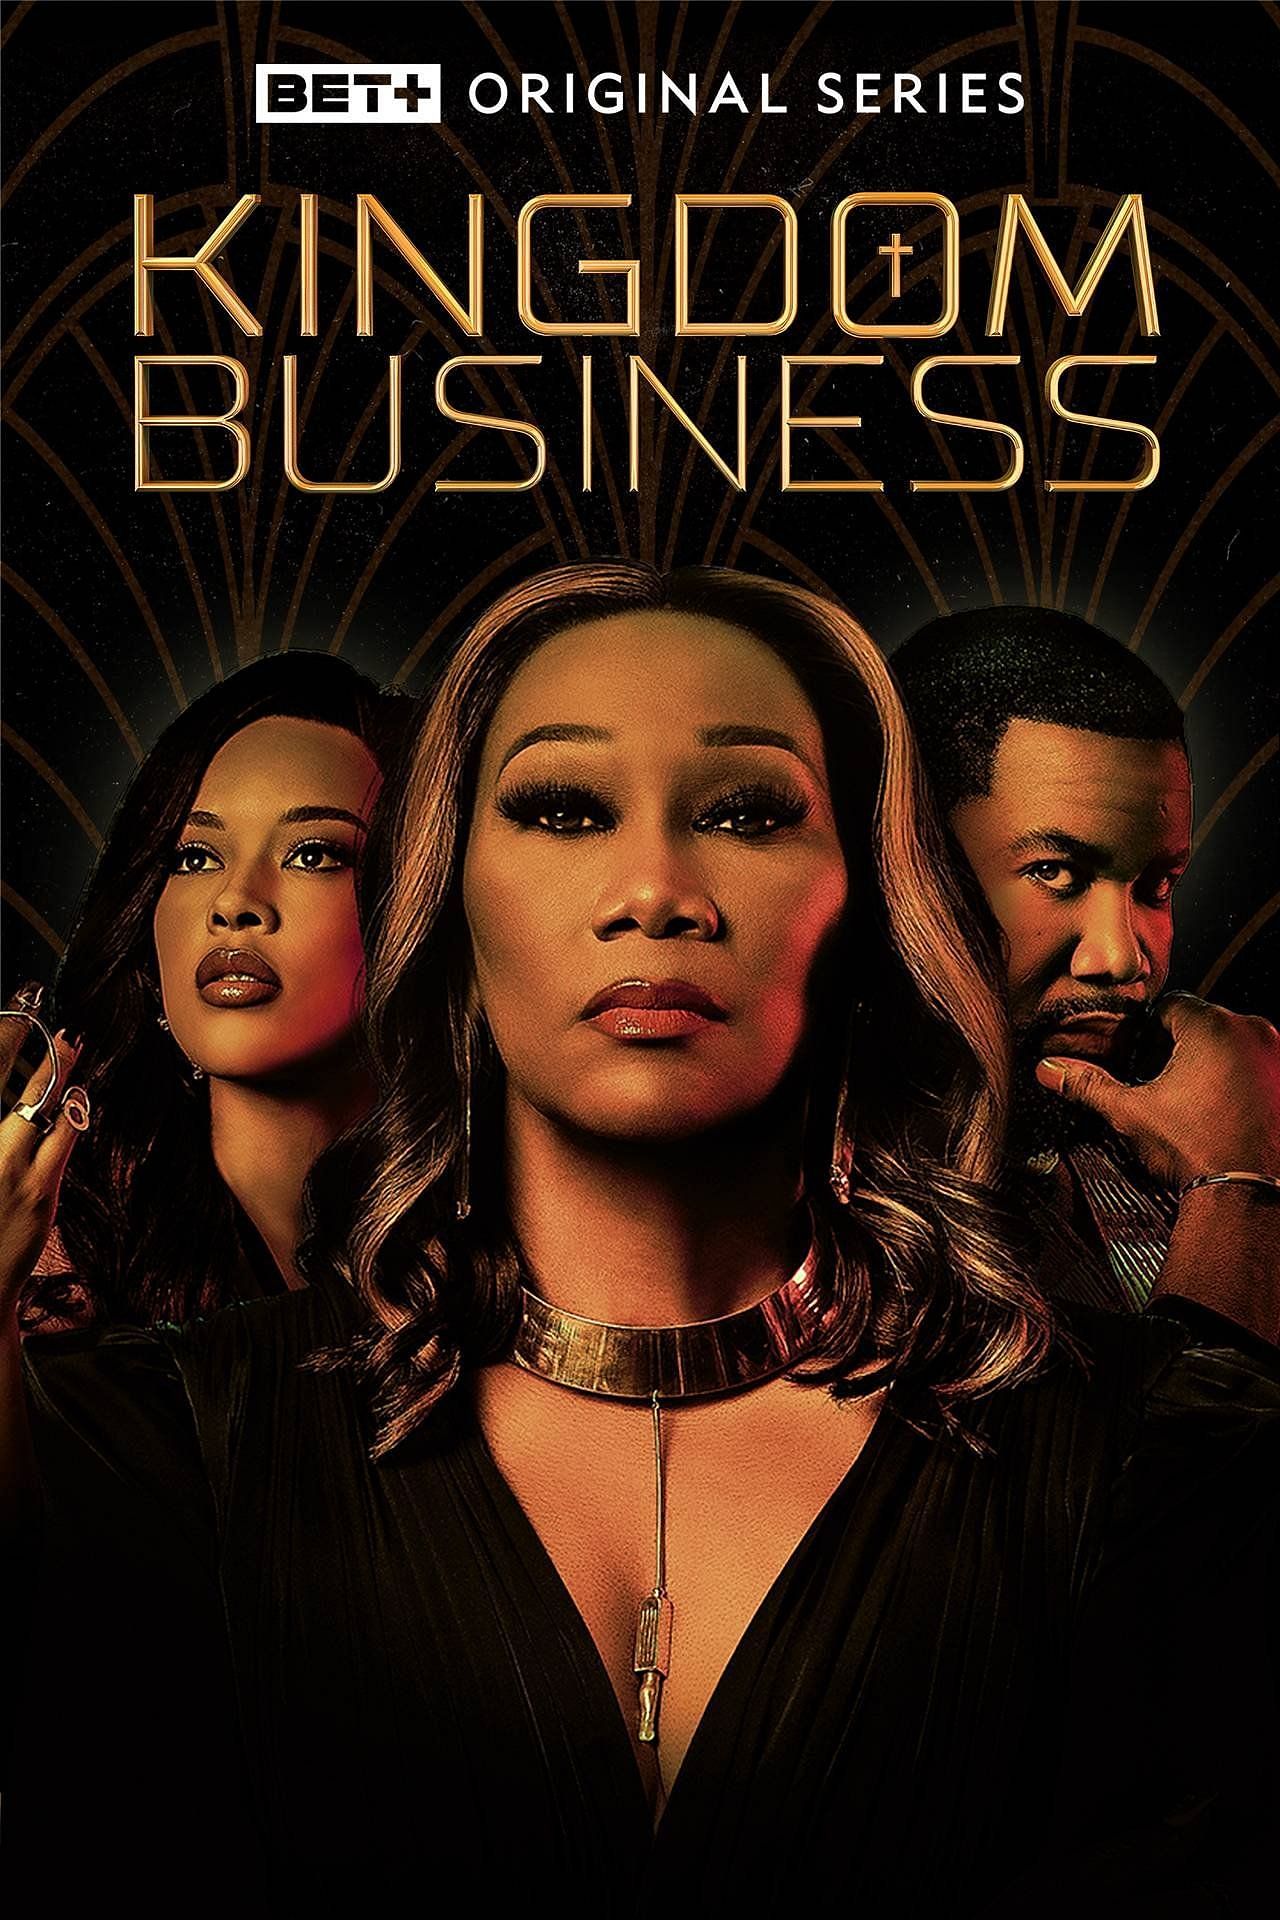 Kingdom Business season 2 complete release schedule: All episodes